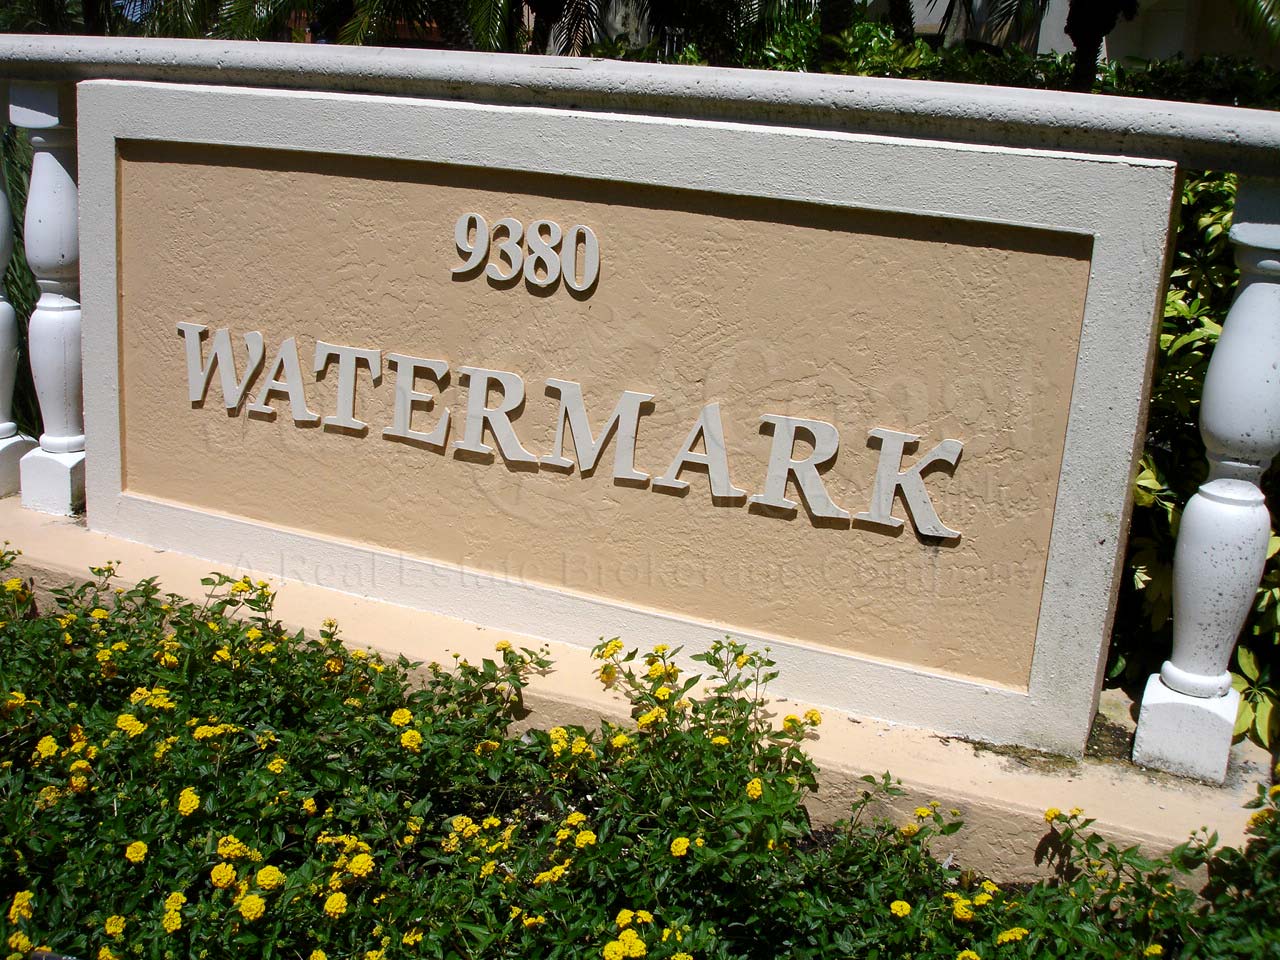 Watermark Signage